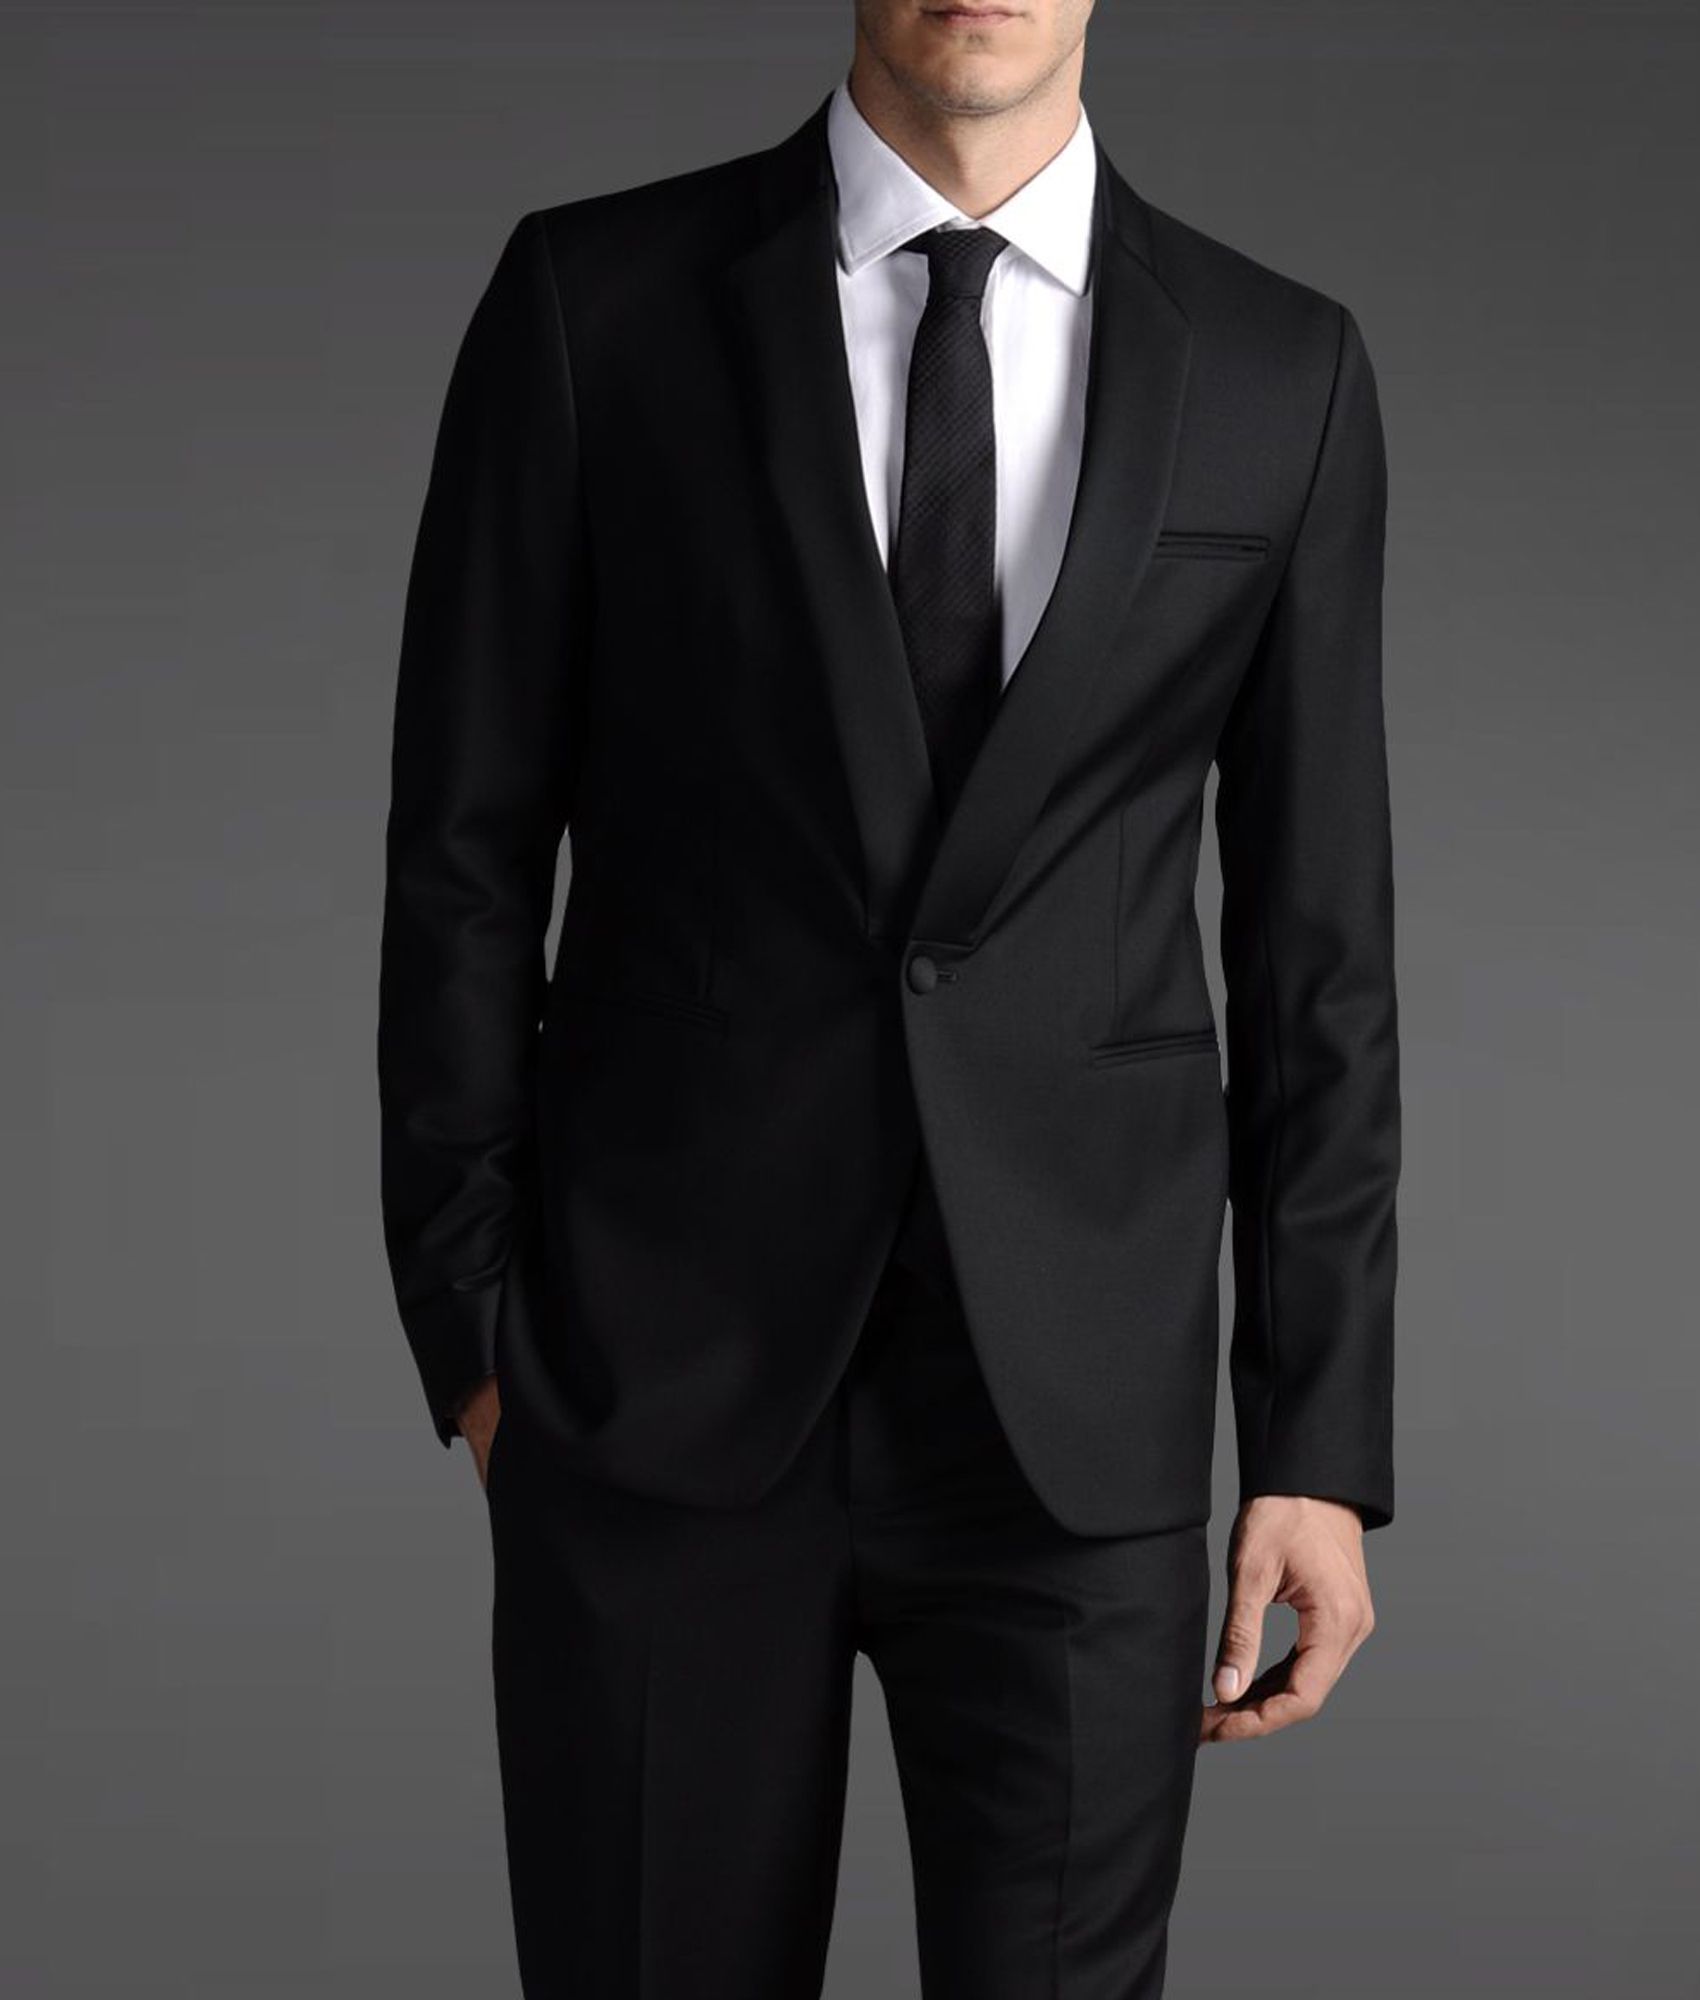 Lyst - Emporio Armani One Button Suit in Black for Men